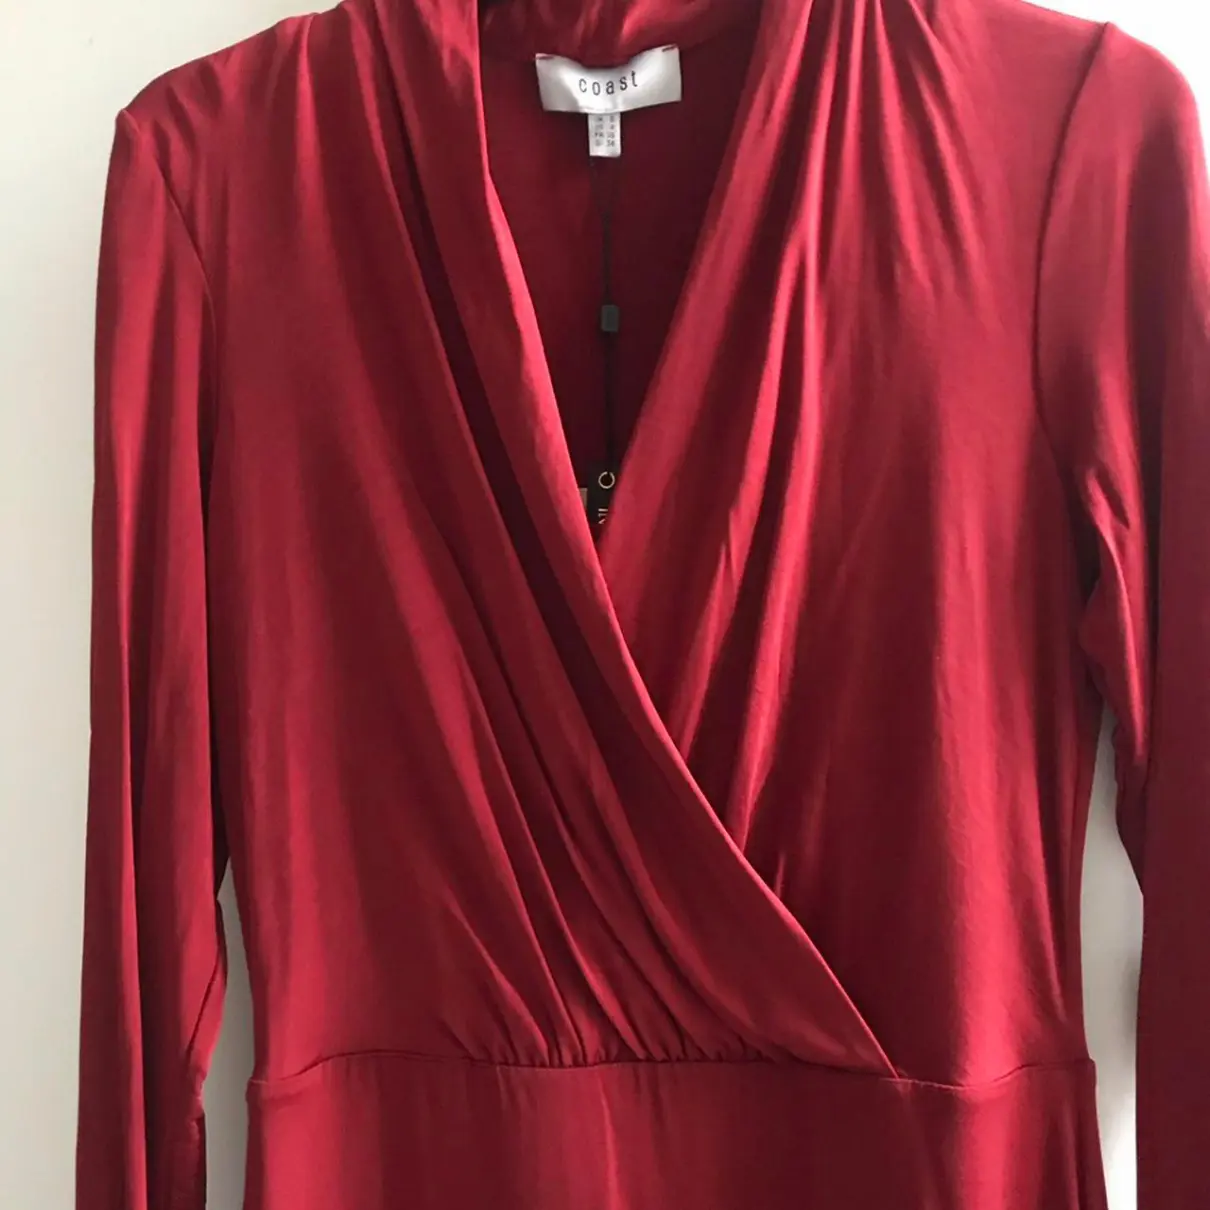 Buy Coast Mid-length dress online